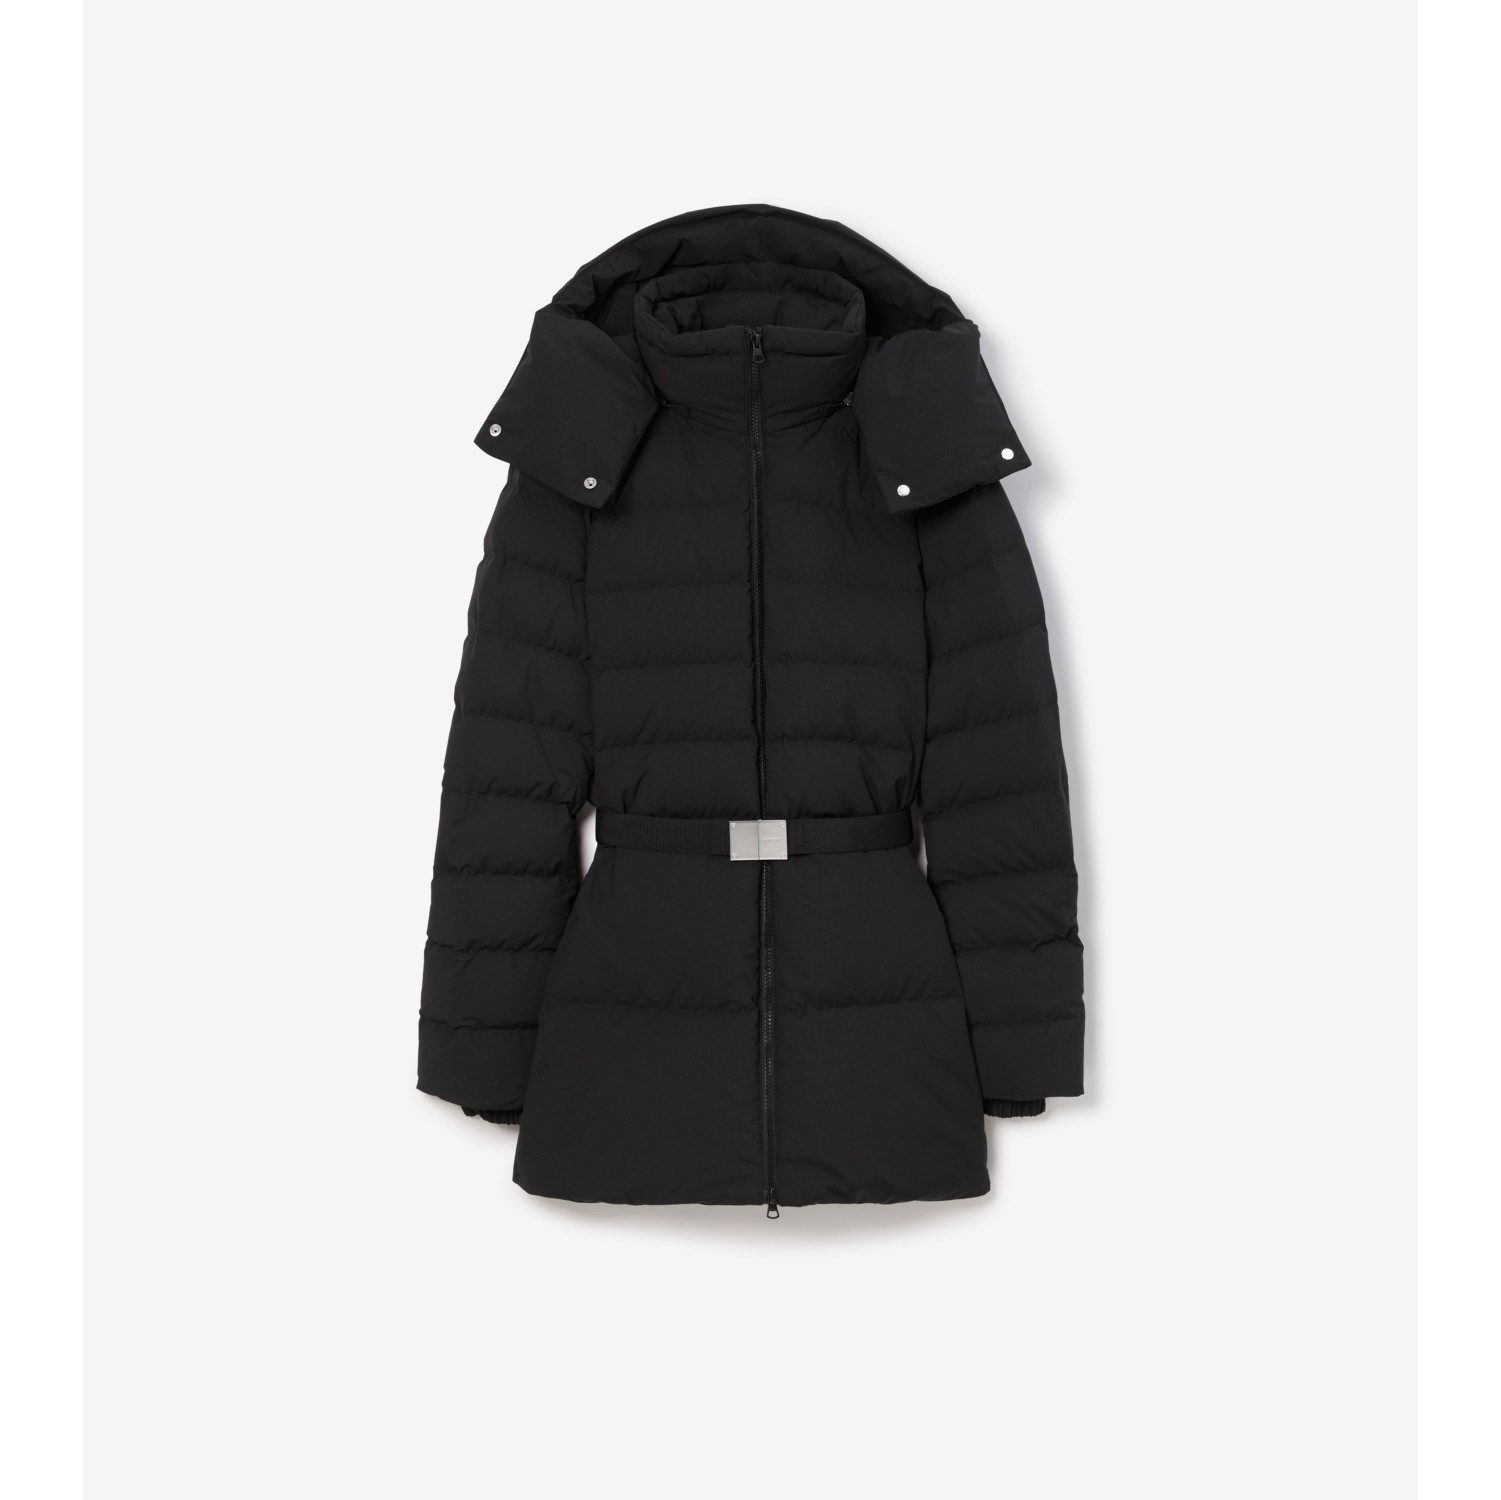 Hot Women's Winter Slim hooded Long Padded jacket Cotton jacket Coat Parka